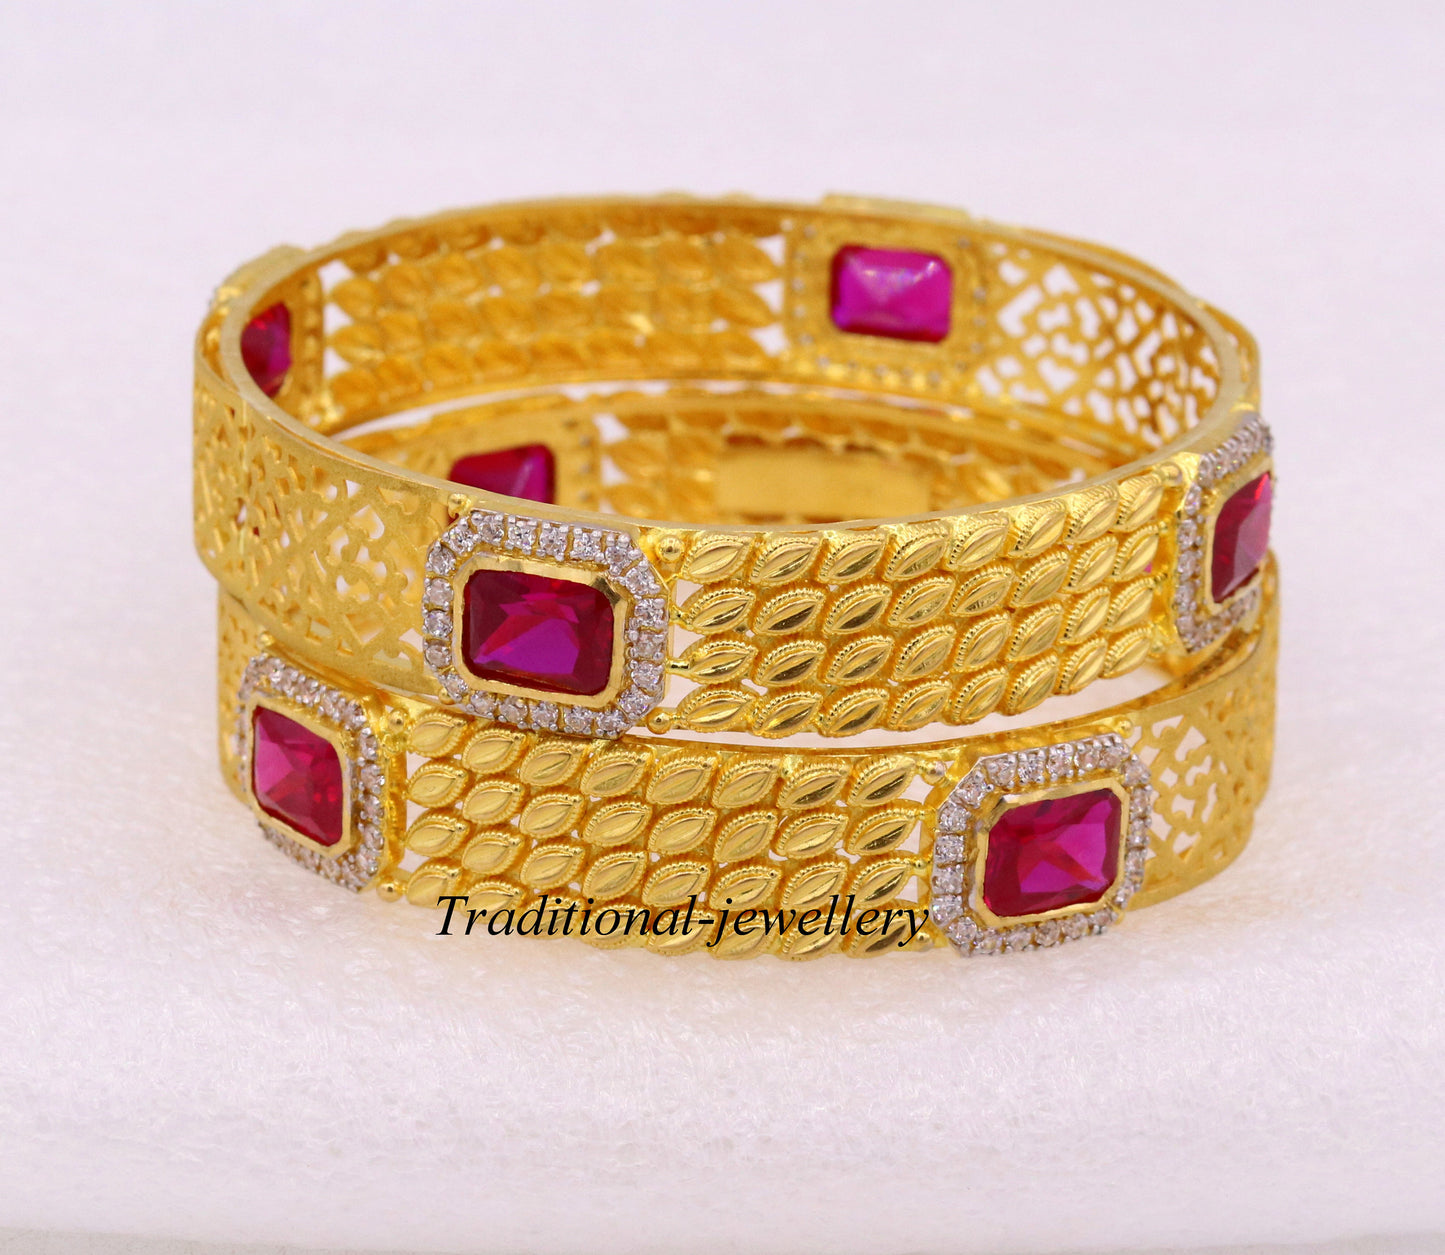 Vintage antique stylish handmade 22kt yellow gold bangle bracelet women's wedding anniversary gifting jewelry - TRIBAL ORNAMENTS